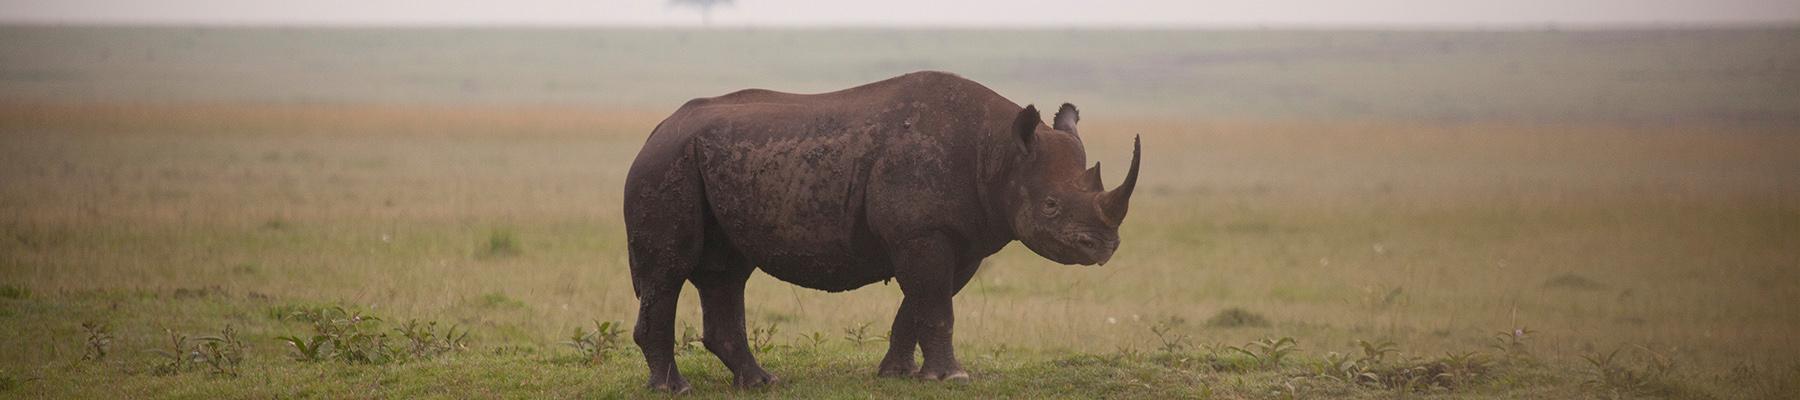 Black Rhino Diceros Bicornis, the more threatened of Africa's two rhino species © Richard Edwards / WWF-UK